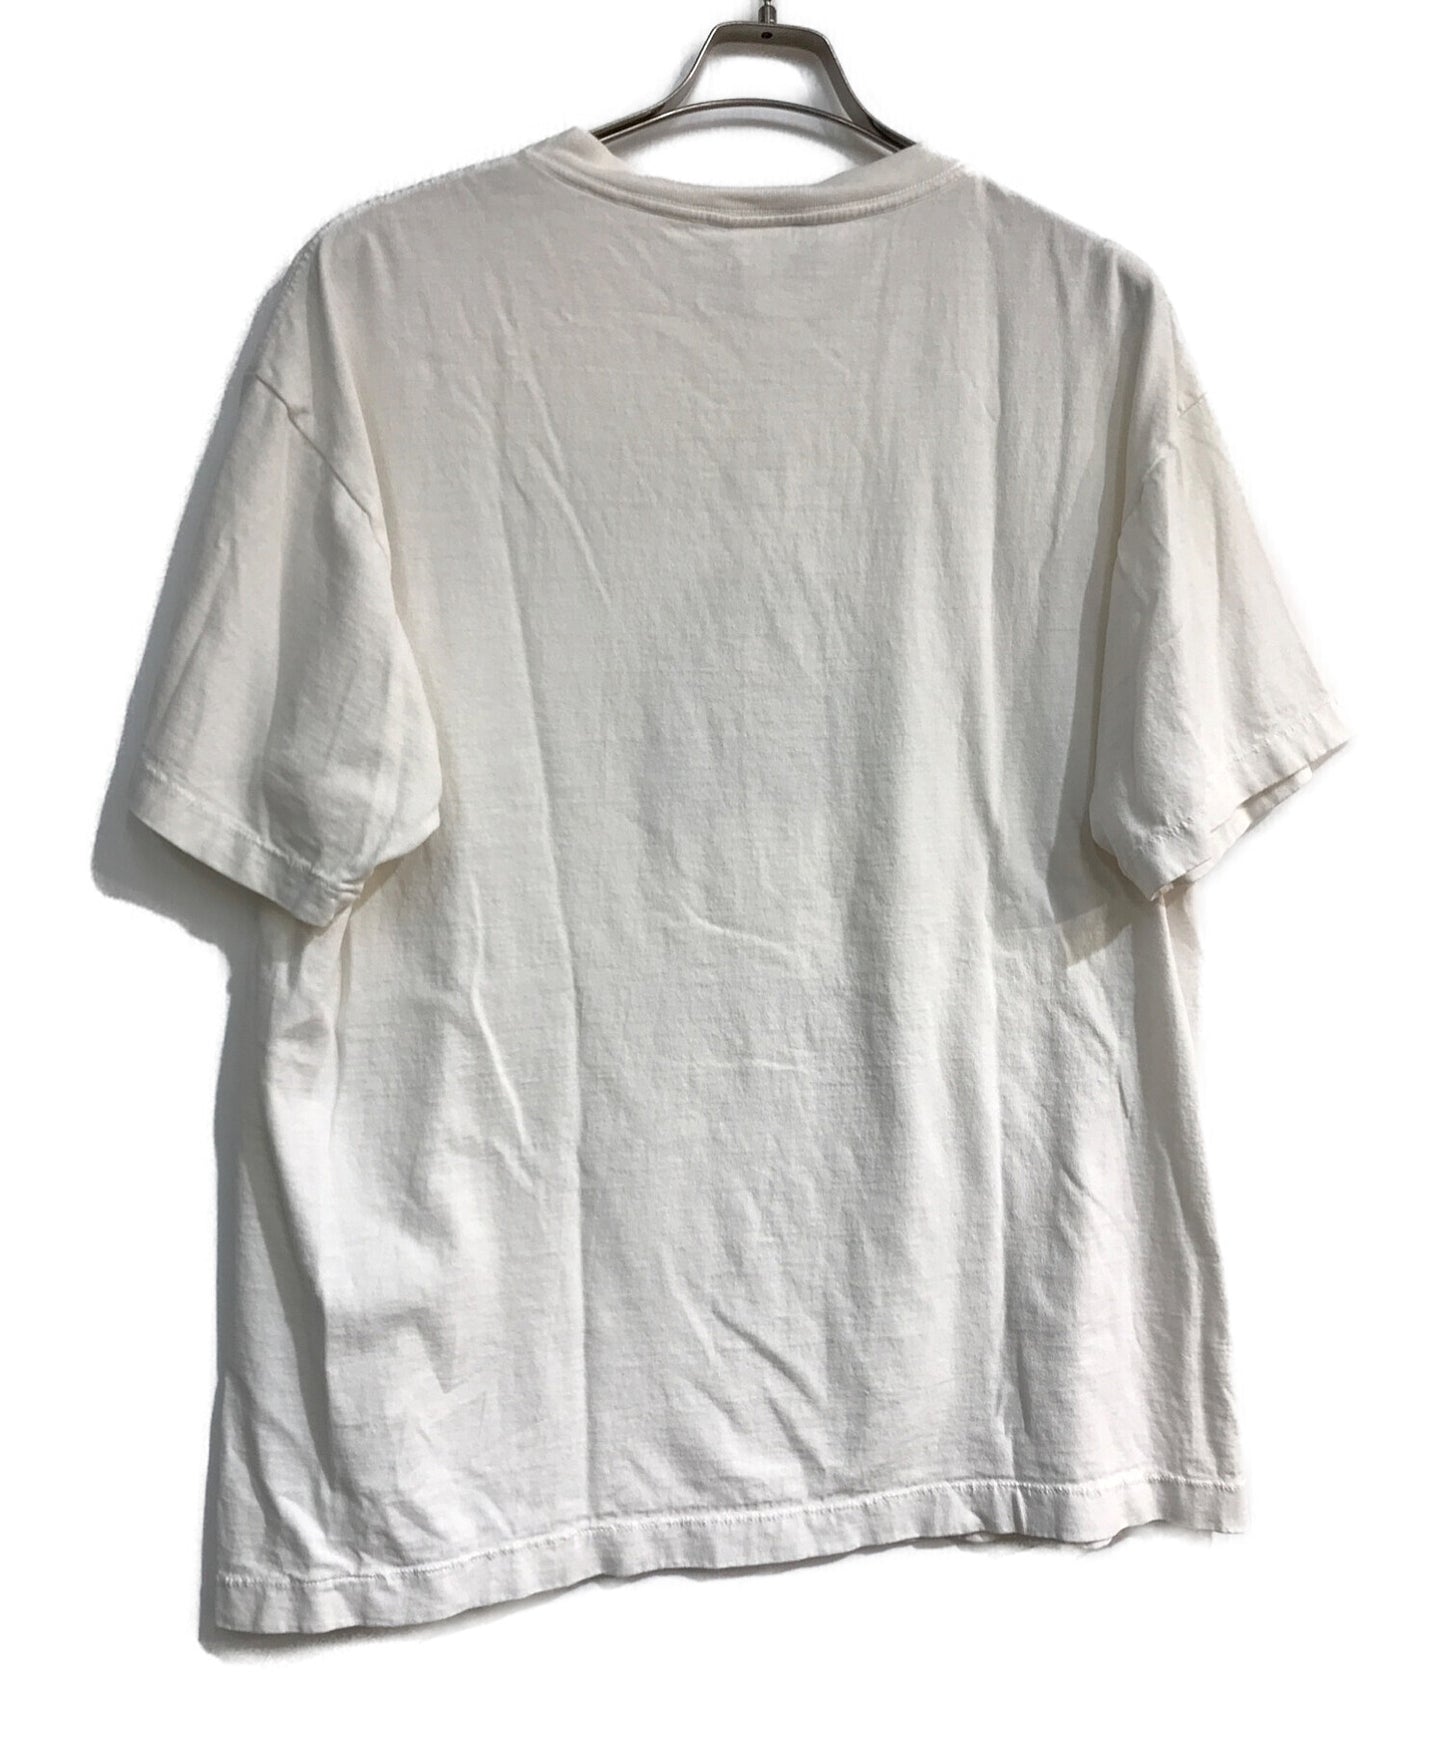 [Pre-owned] SAINT MICHAEL SS T-shirt OH SHIT SM-A22-0000-003 SM-A22-0000-003